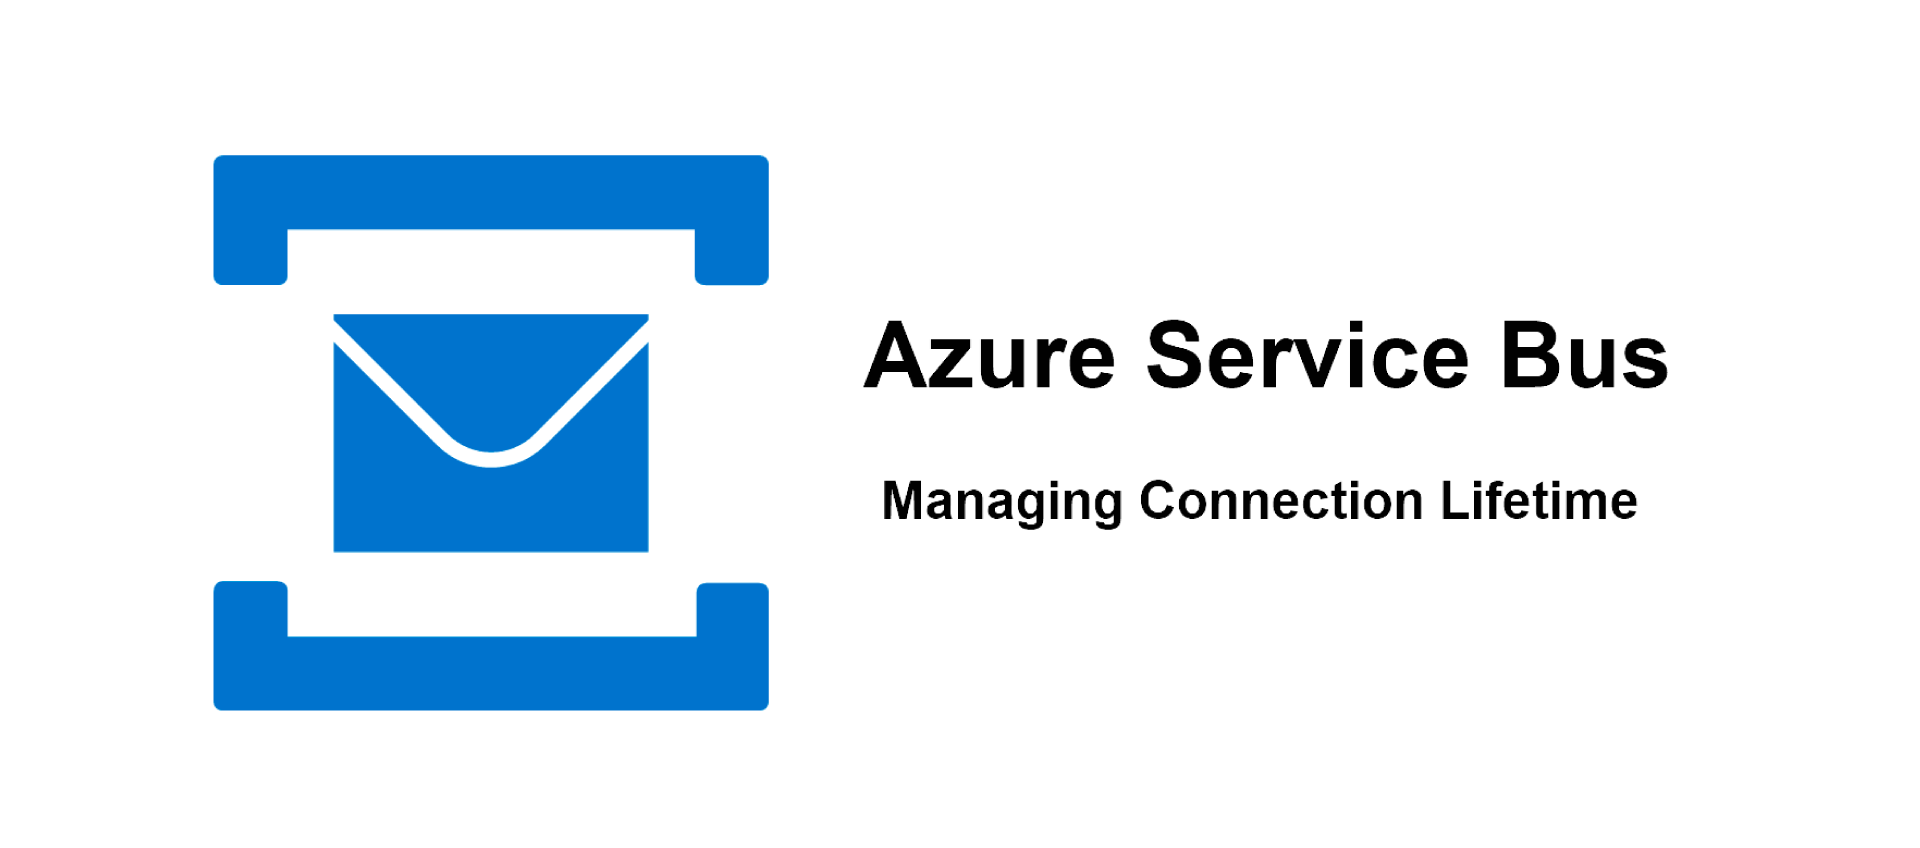 Microsoft Azure Service Bus